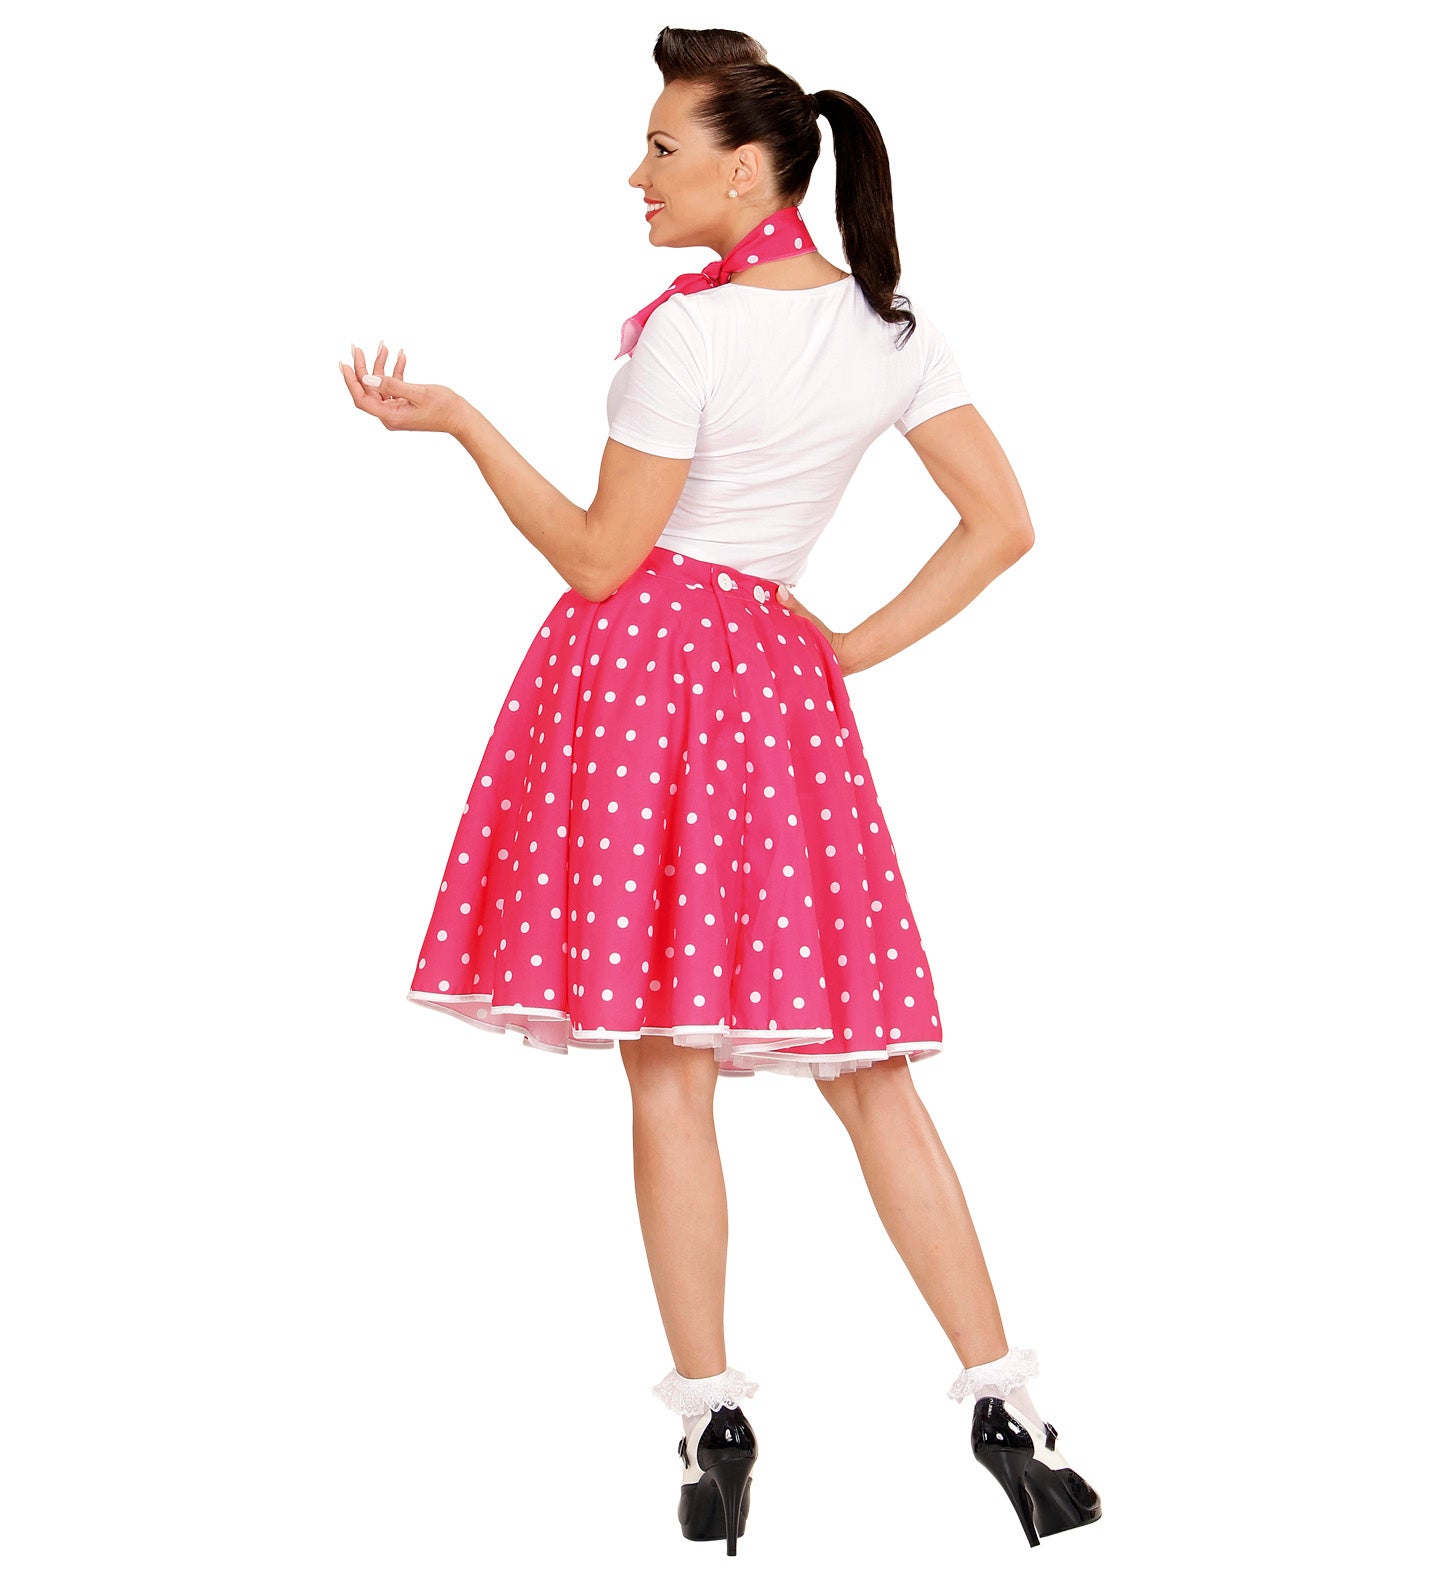 50's Rockabilly Pink Polka Dot Skirt outfit rear